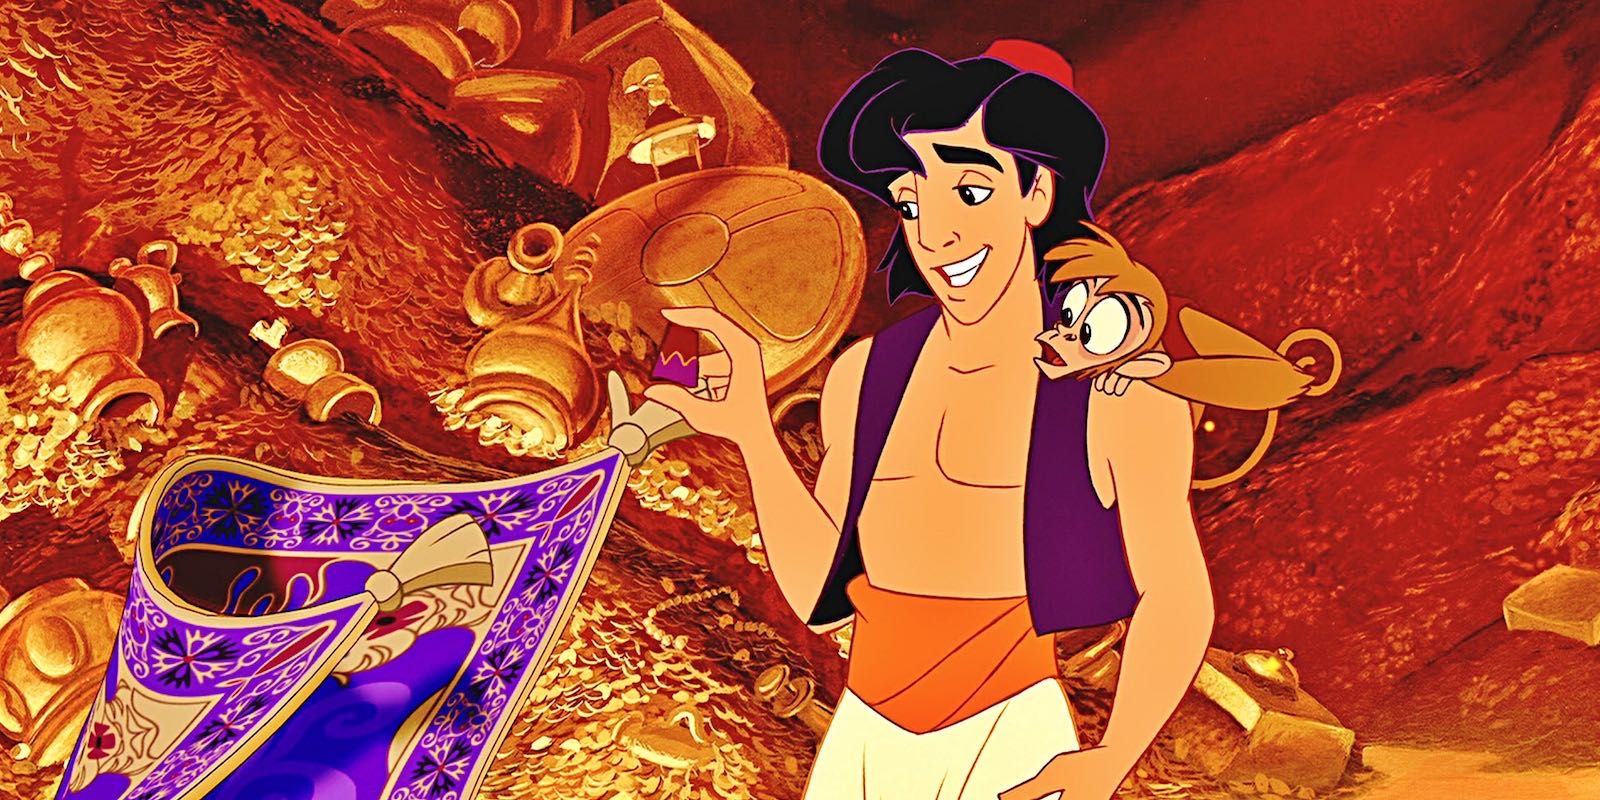 Was Aladdin Originally Arab, Indian or Chinese?